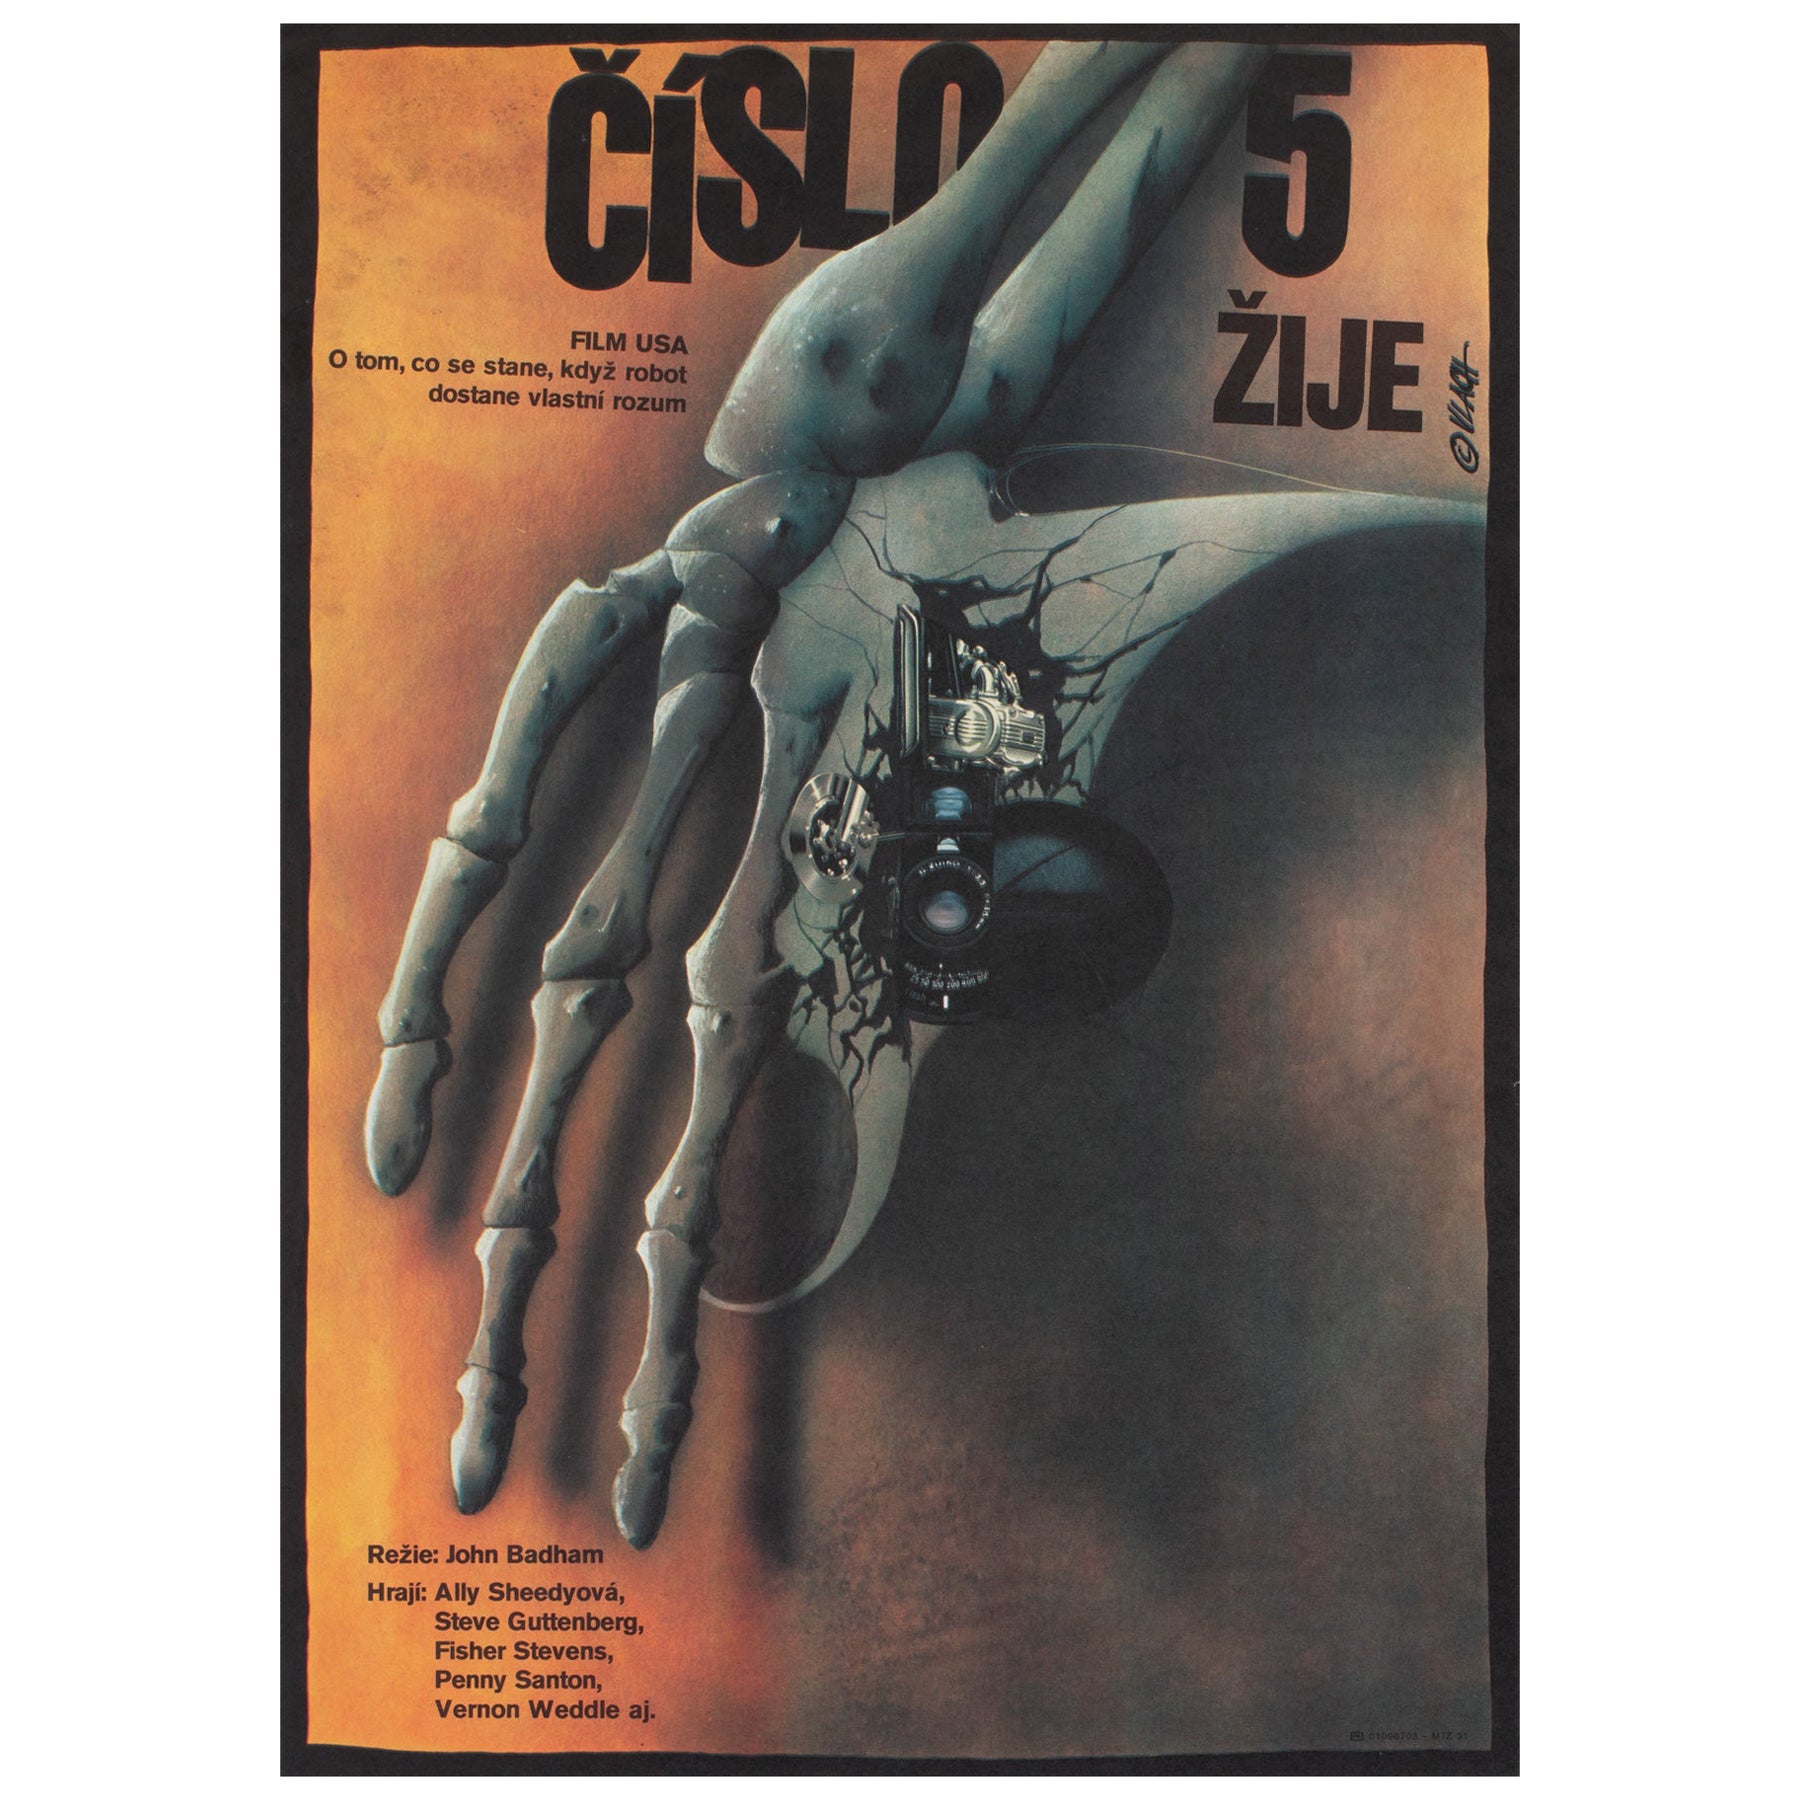 Affiche A3 tchèque du film Short Circuit, Zdenek Vlach, 1989